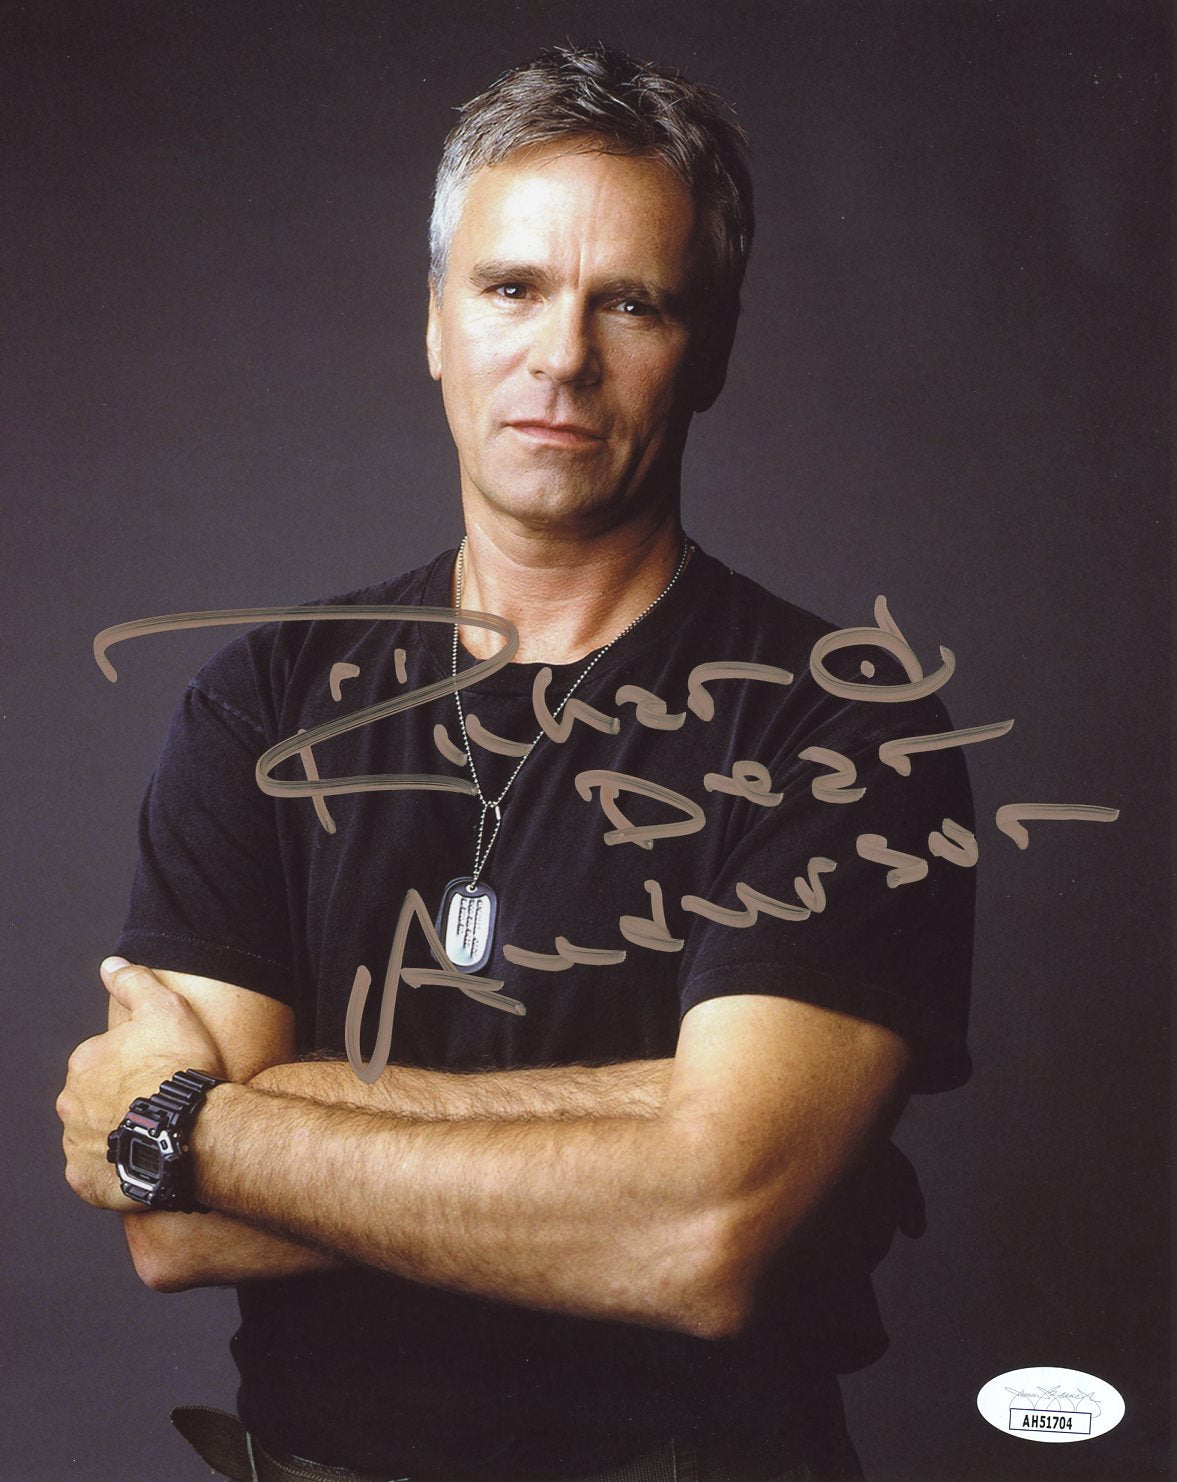 Richard Dean Anderson Stargate SG1 8x10 Signed Photo JSA Certified Autograph